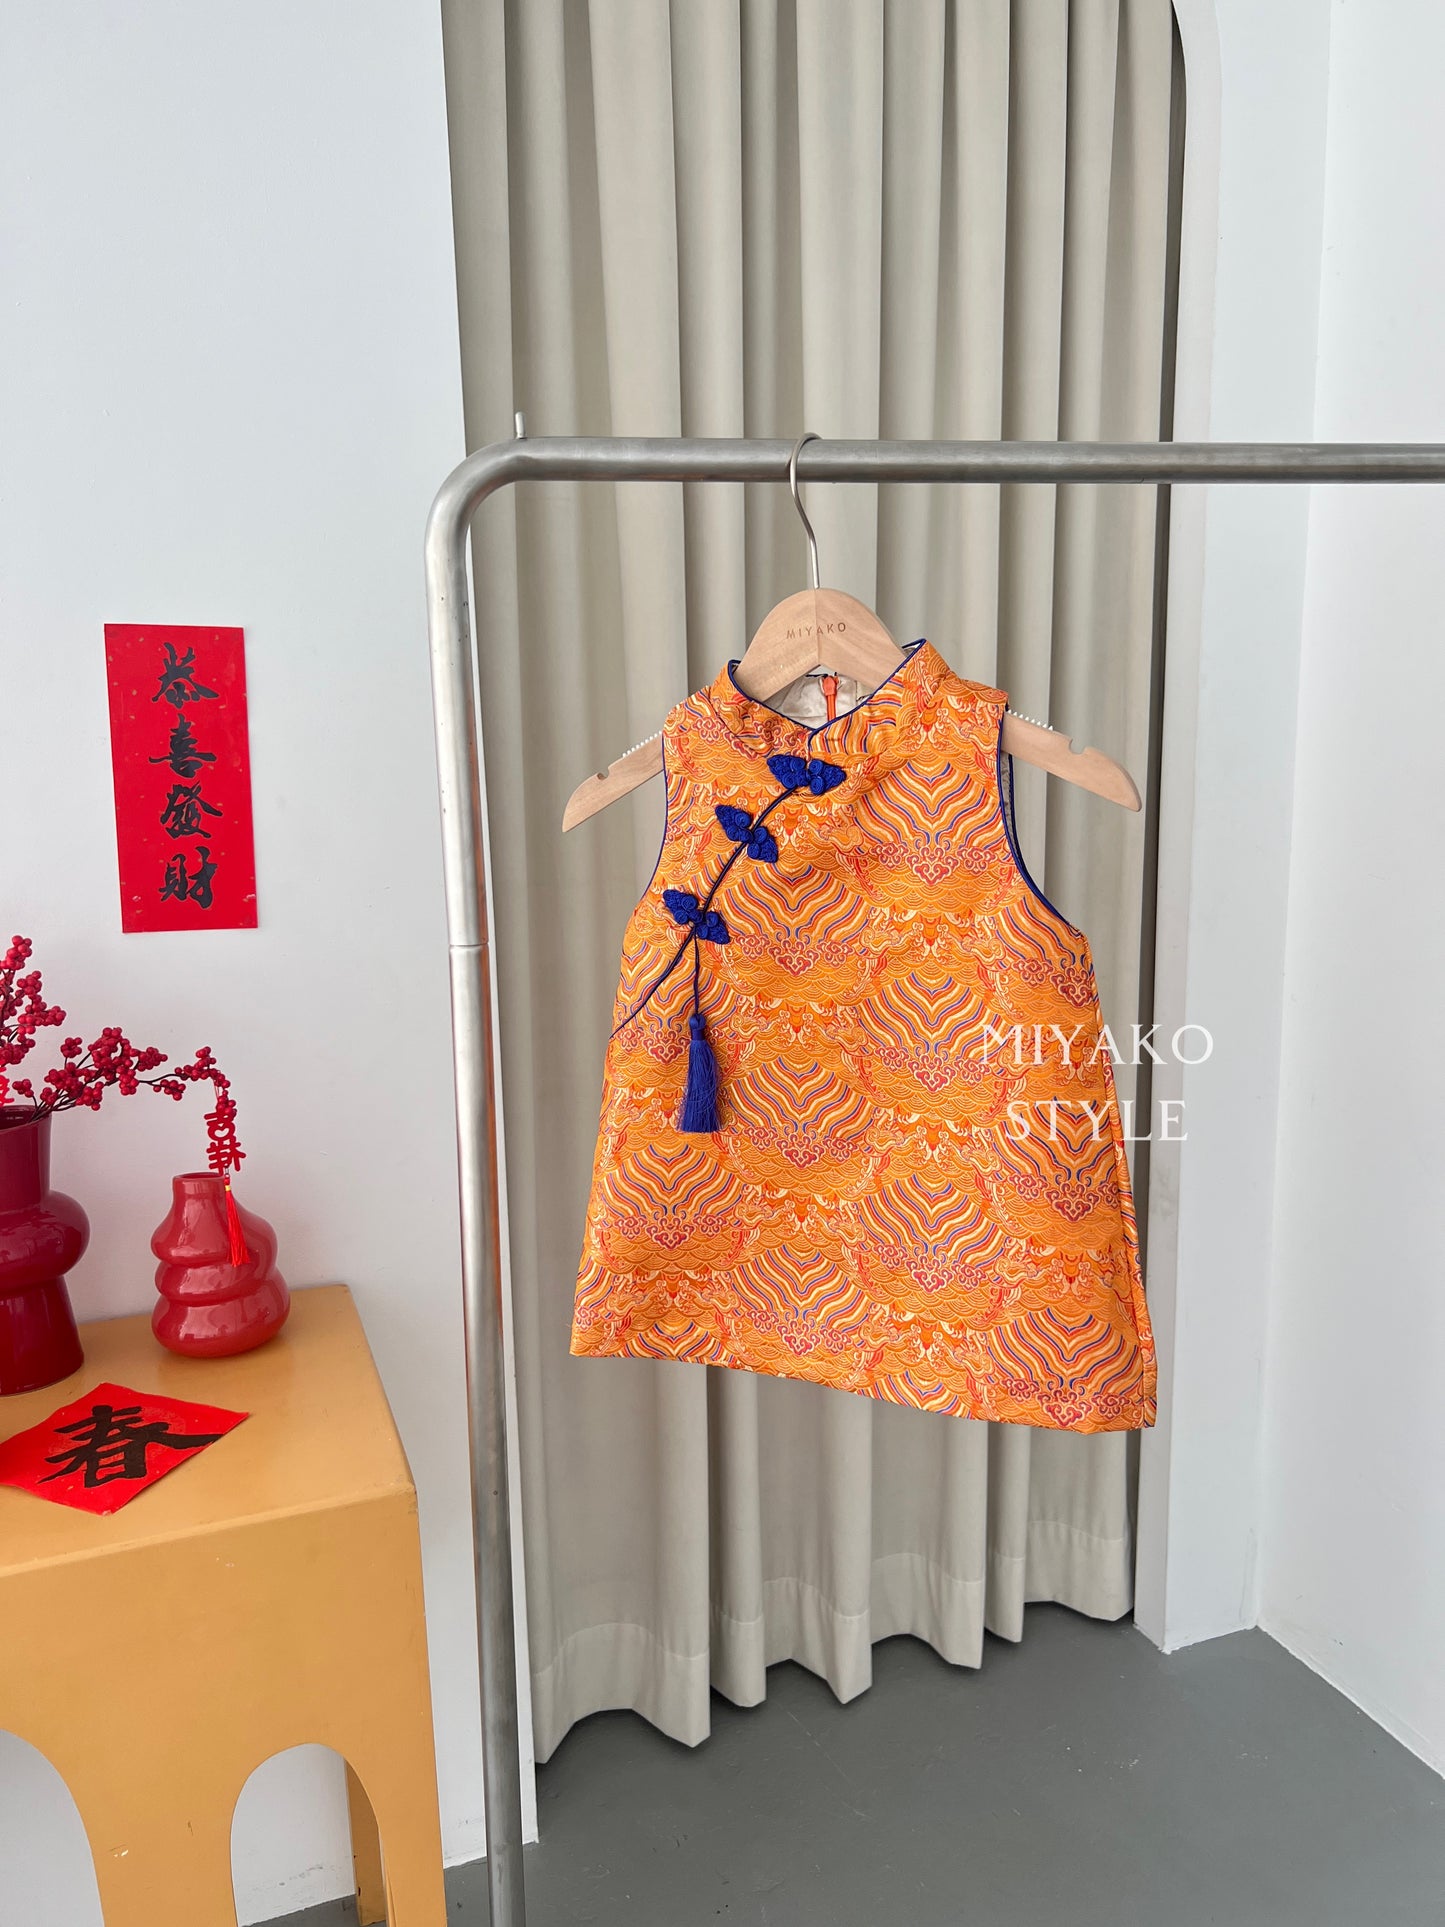 【龍華富貴】 Royal Cheongsam little girl dress in red 红运当头 (女童连衣裙)